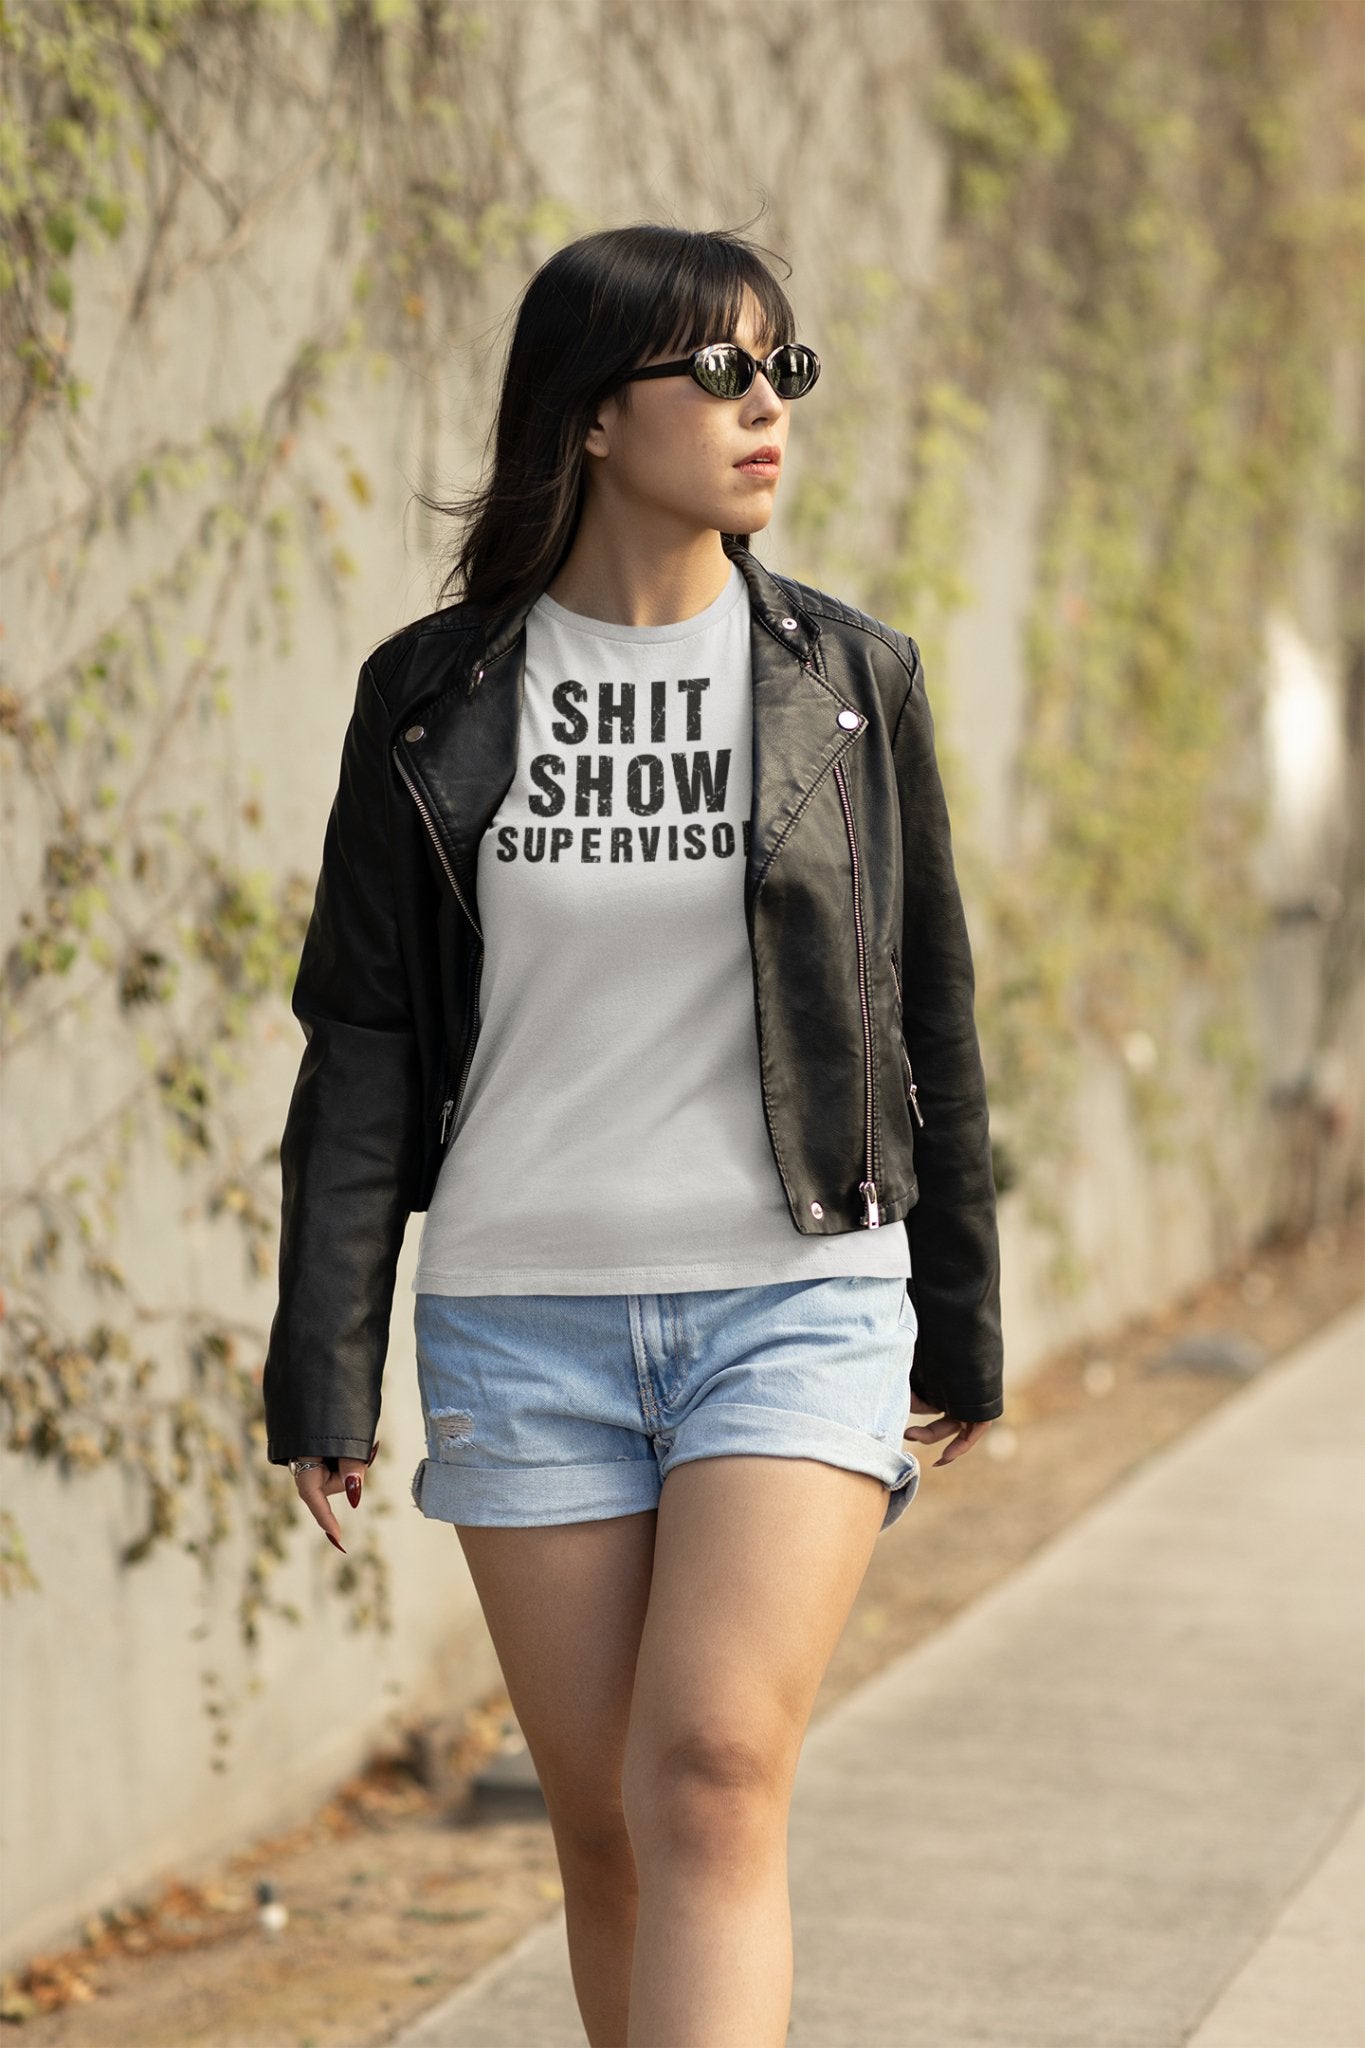 CrazyYetiClothing, CYC, Shit Show Supervisor (Women's Softstyle Tee, Explicit), T-Shirt